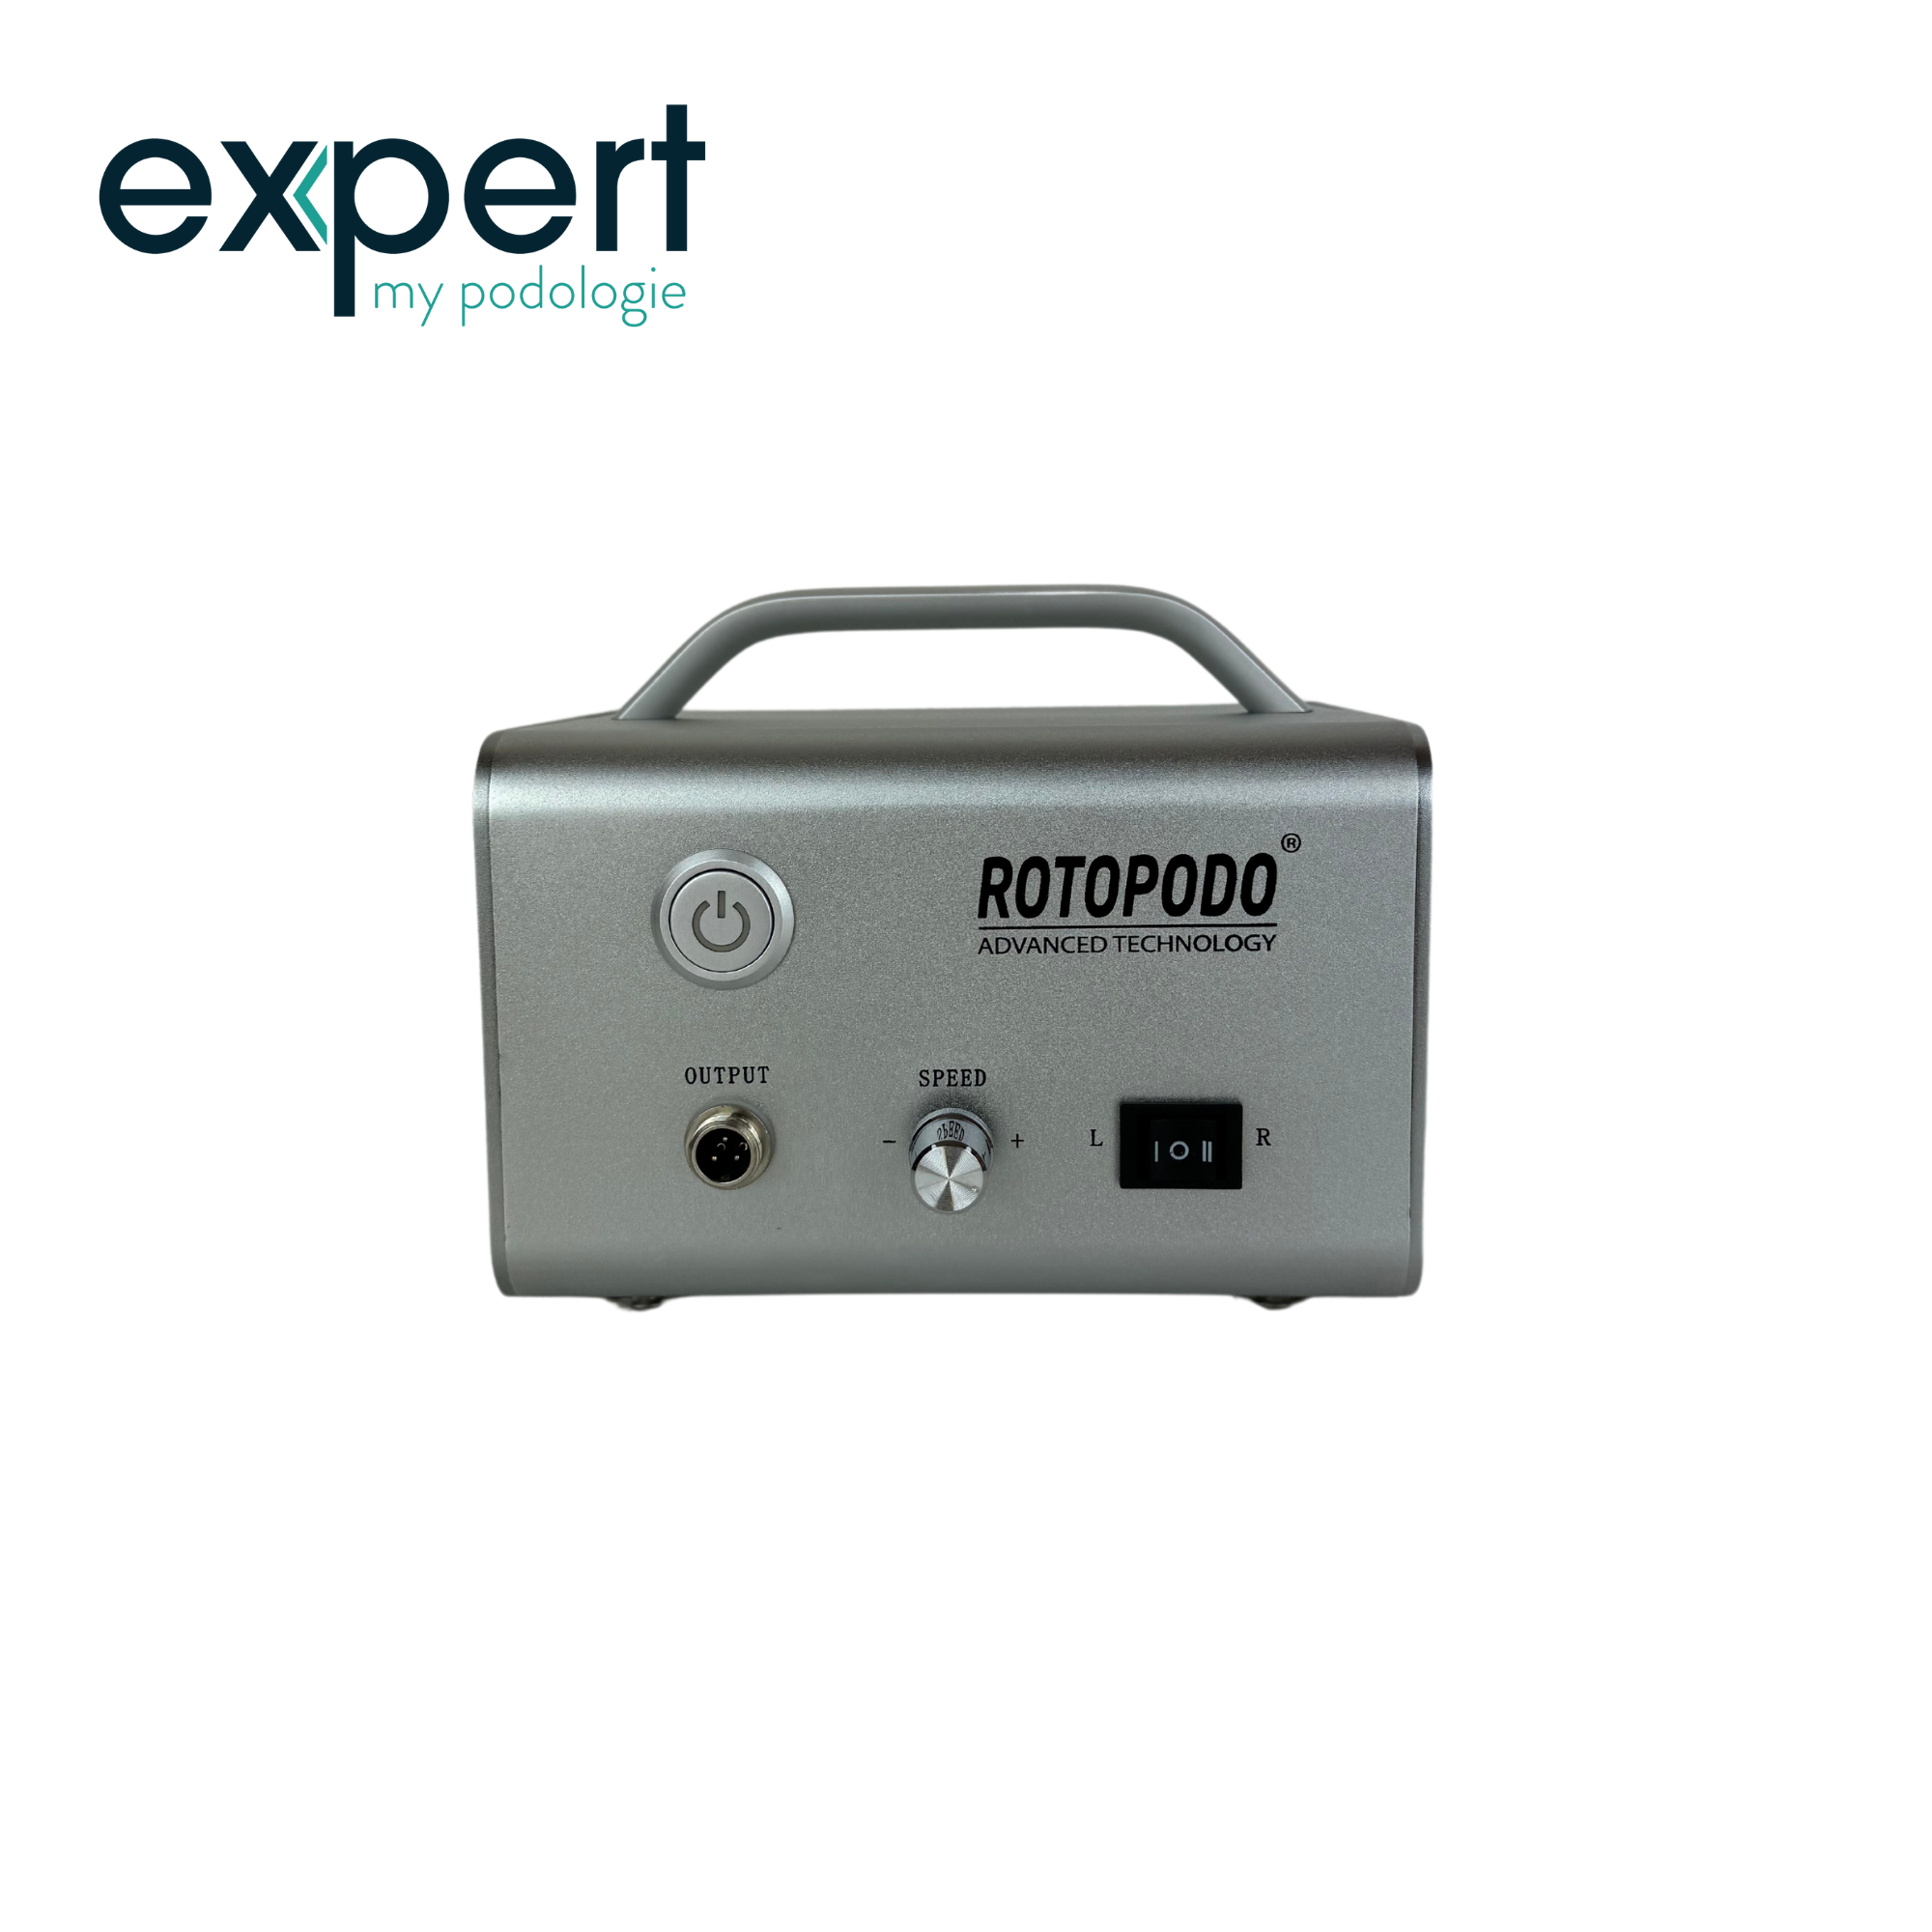 Micromoteur filaire Rotopodo - 40 000 tpm avec pédale - My Podologie